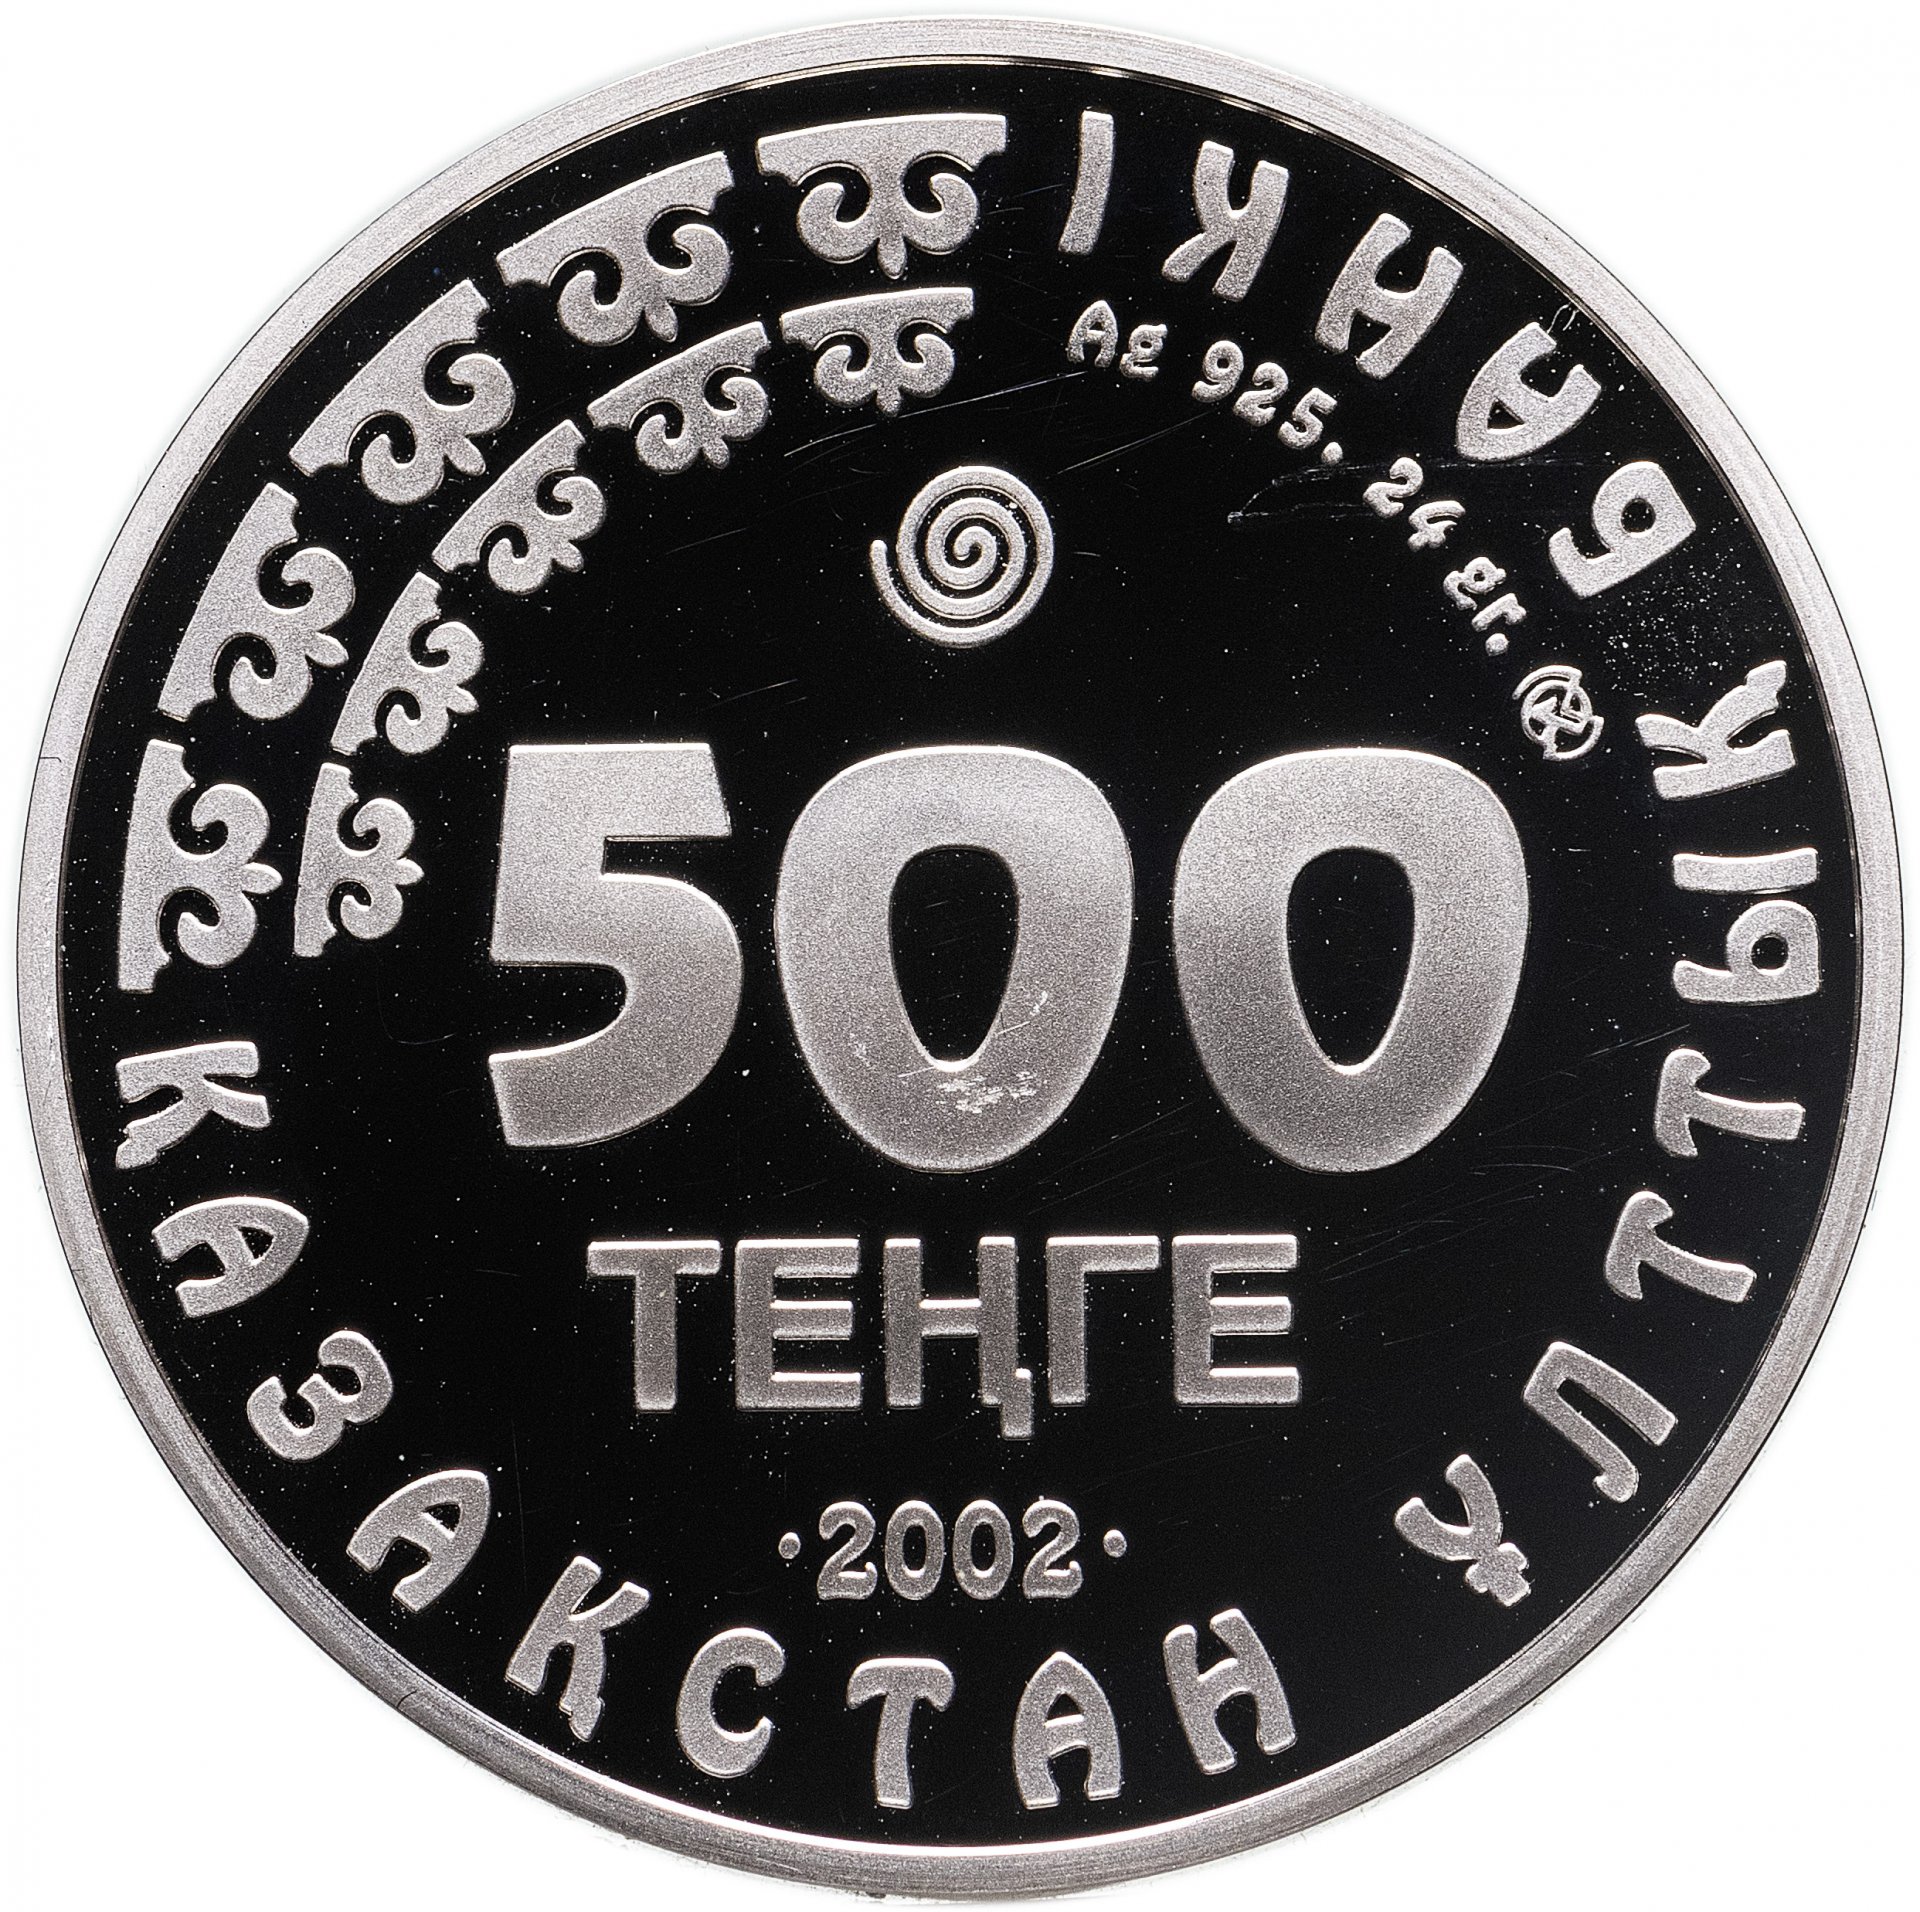 500 тг в рубли. 500 Тенге. 500 Тг монета. 500 Тенге монета 2003. 500 Тенге монета.